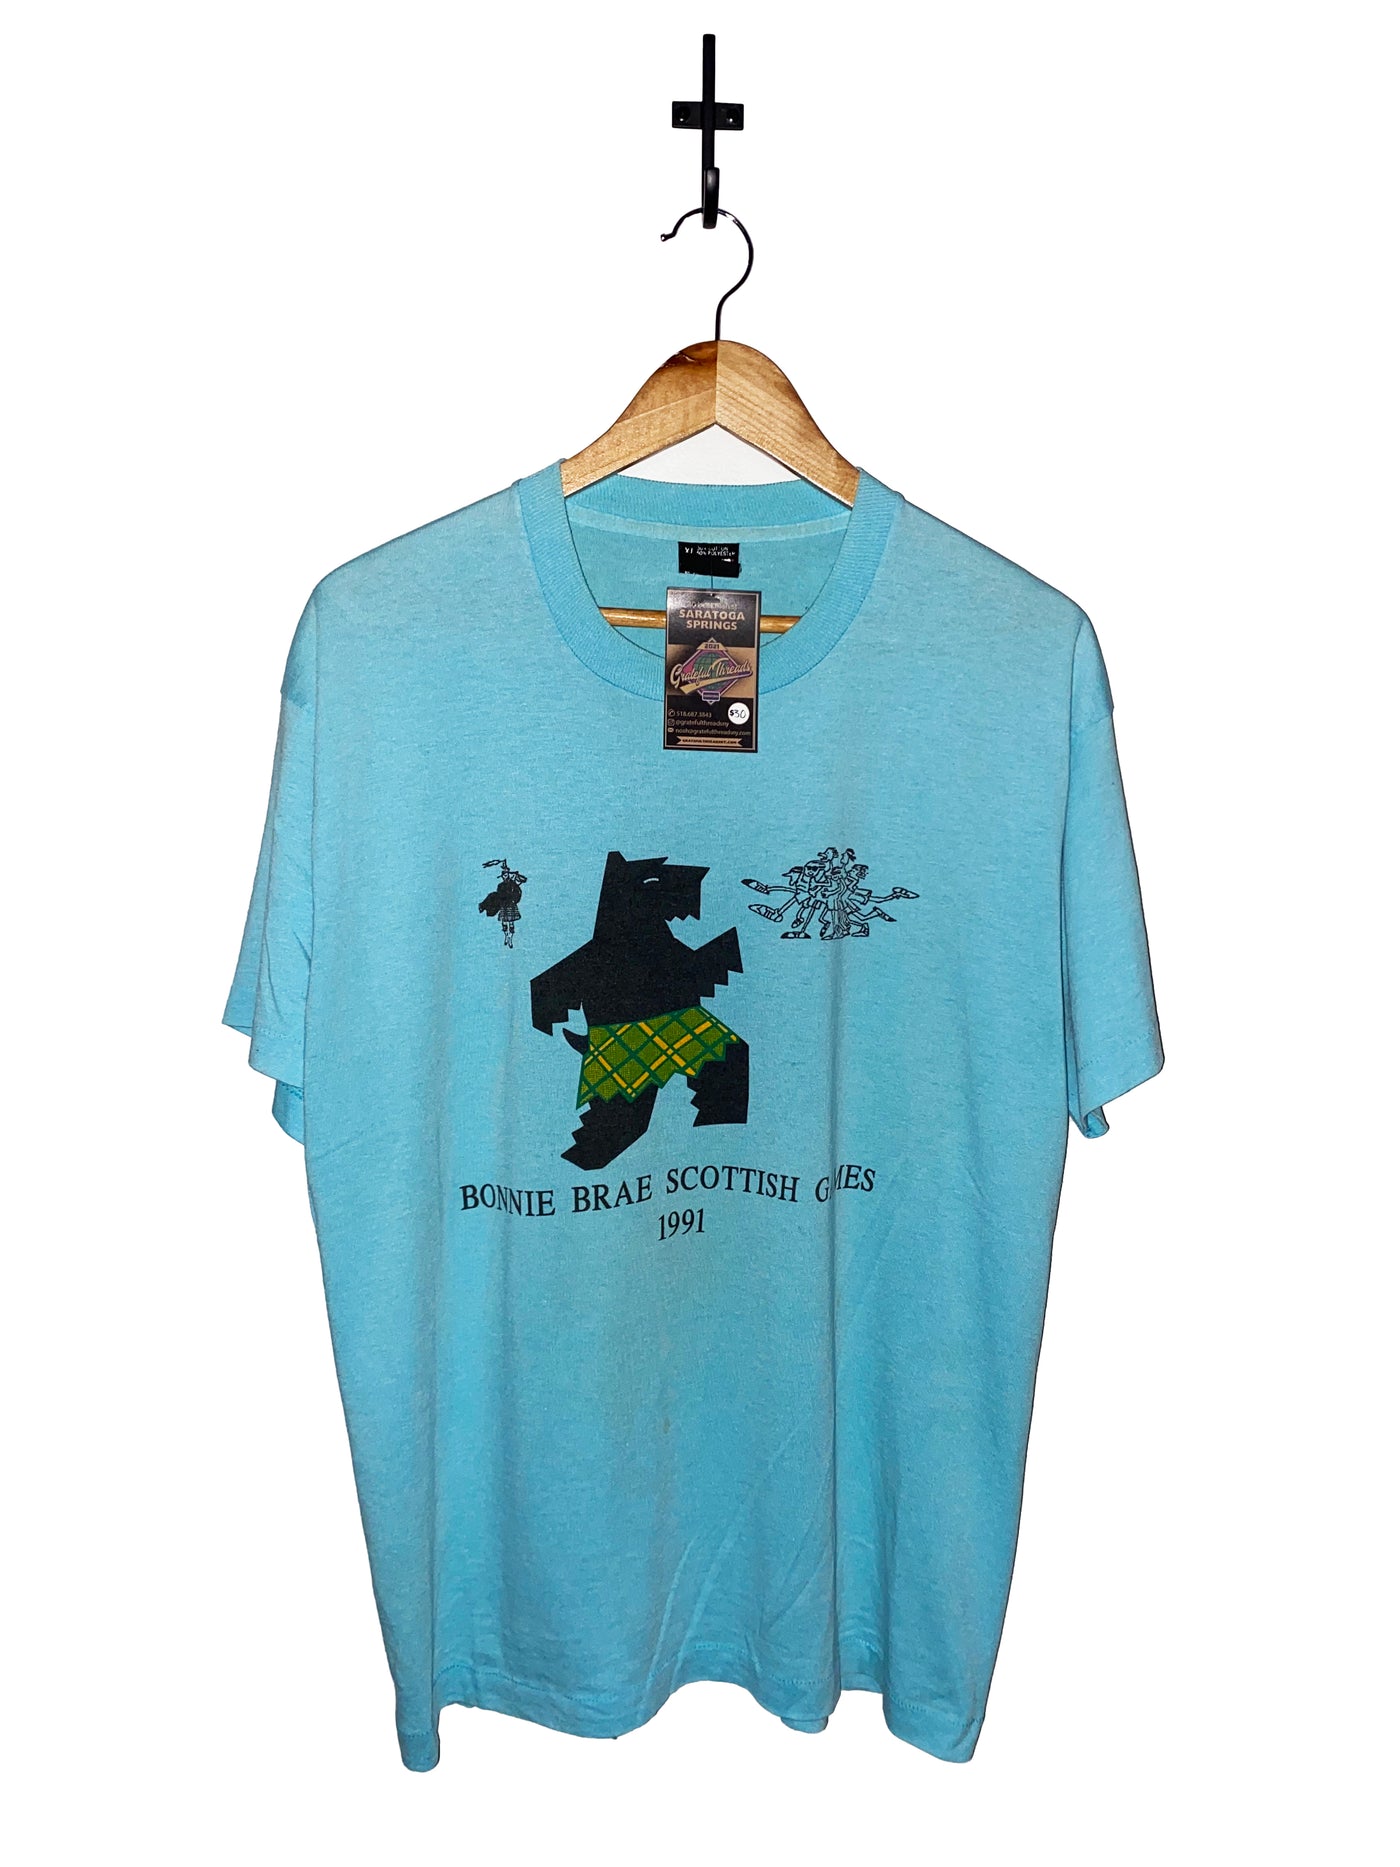 Vintage 1991 Scottish Games T-Shirt